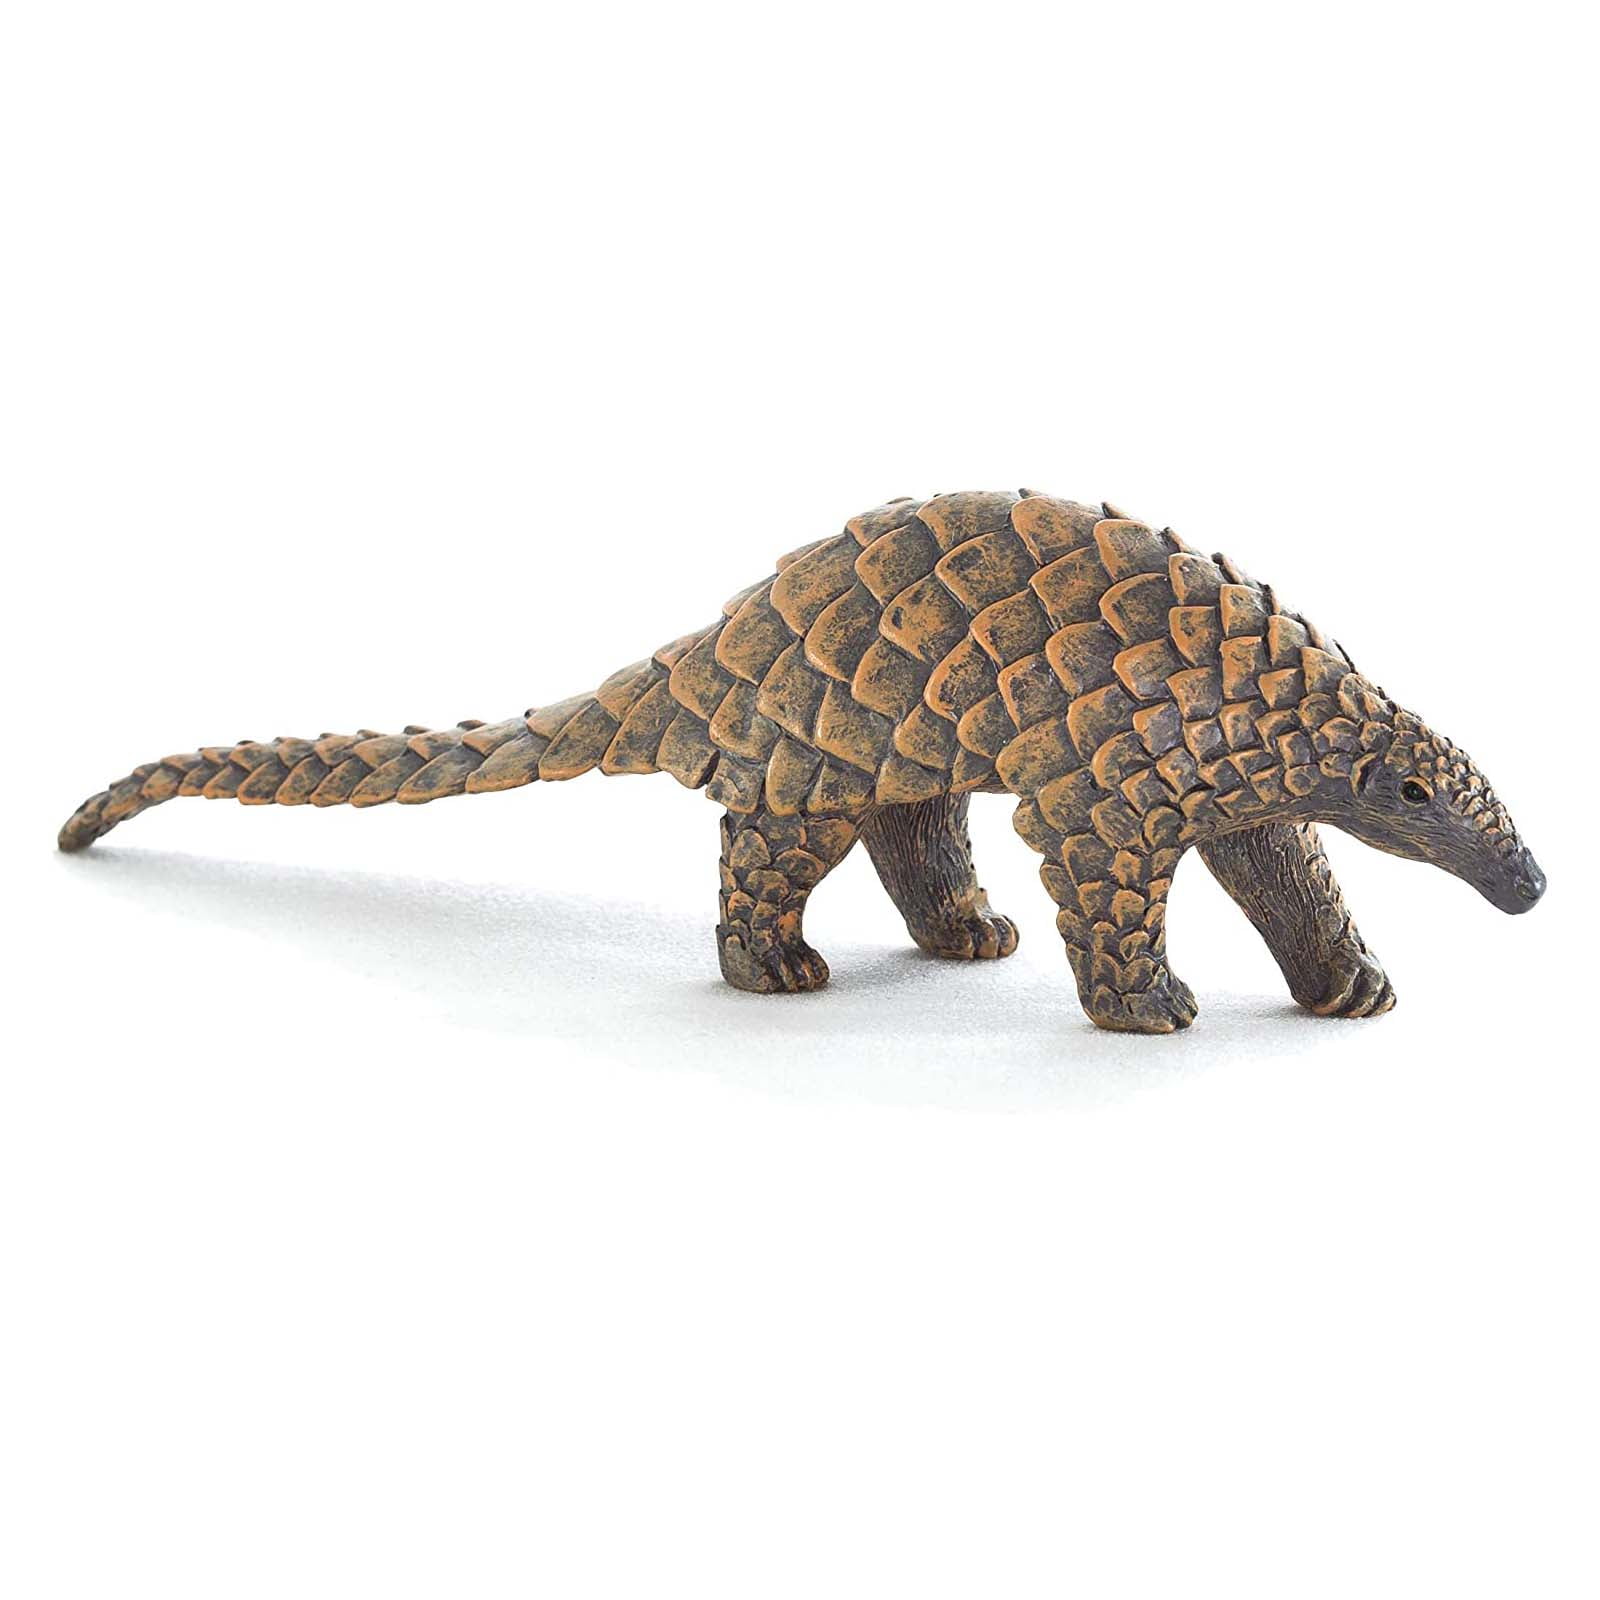 17cm long Safari Ltd PANGOLIN replica wildlife  plastic mammal model toy 